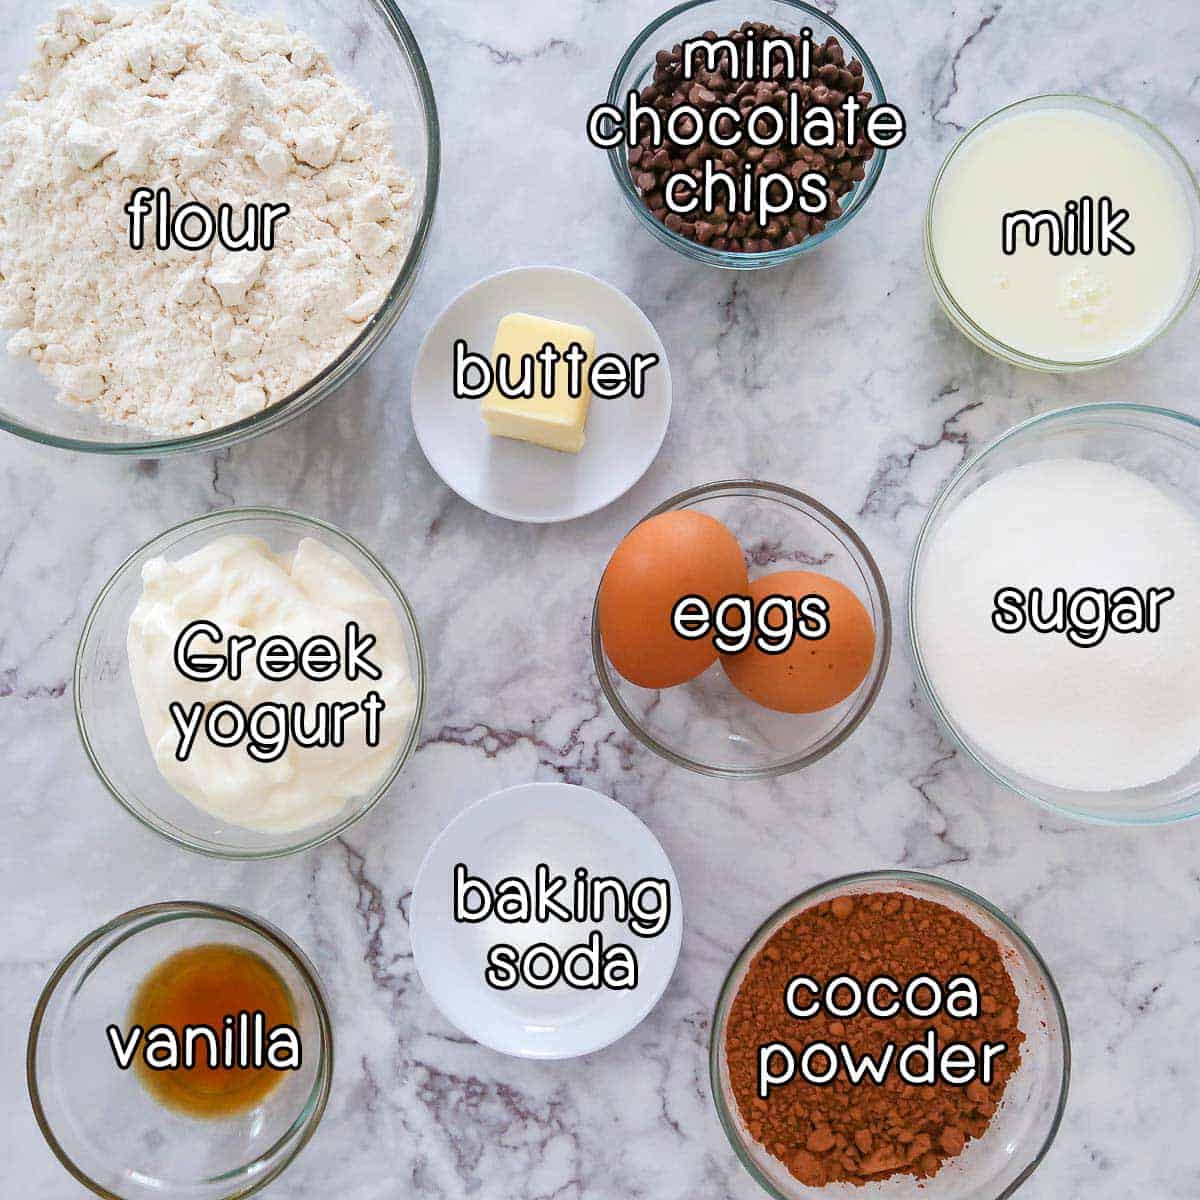 Overhead shot of ingredients- flour, mini chocolate chips, milk, butter, Greek yogurt, eggs, sugar, vanilla, baking soda, and cocoa powder.